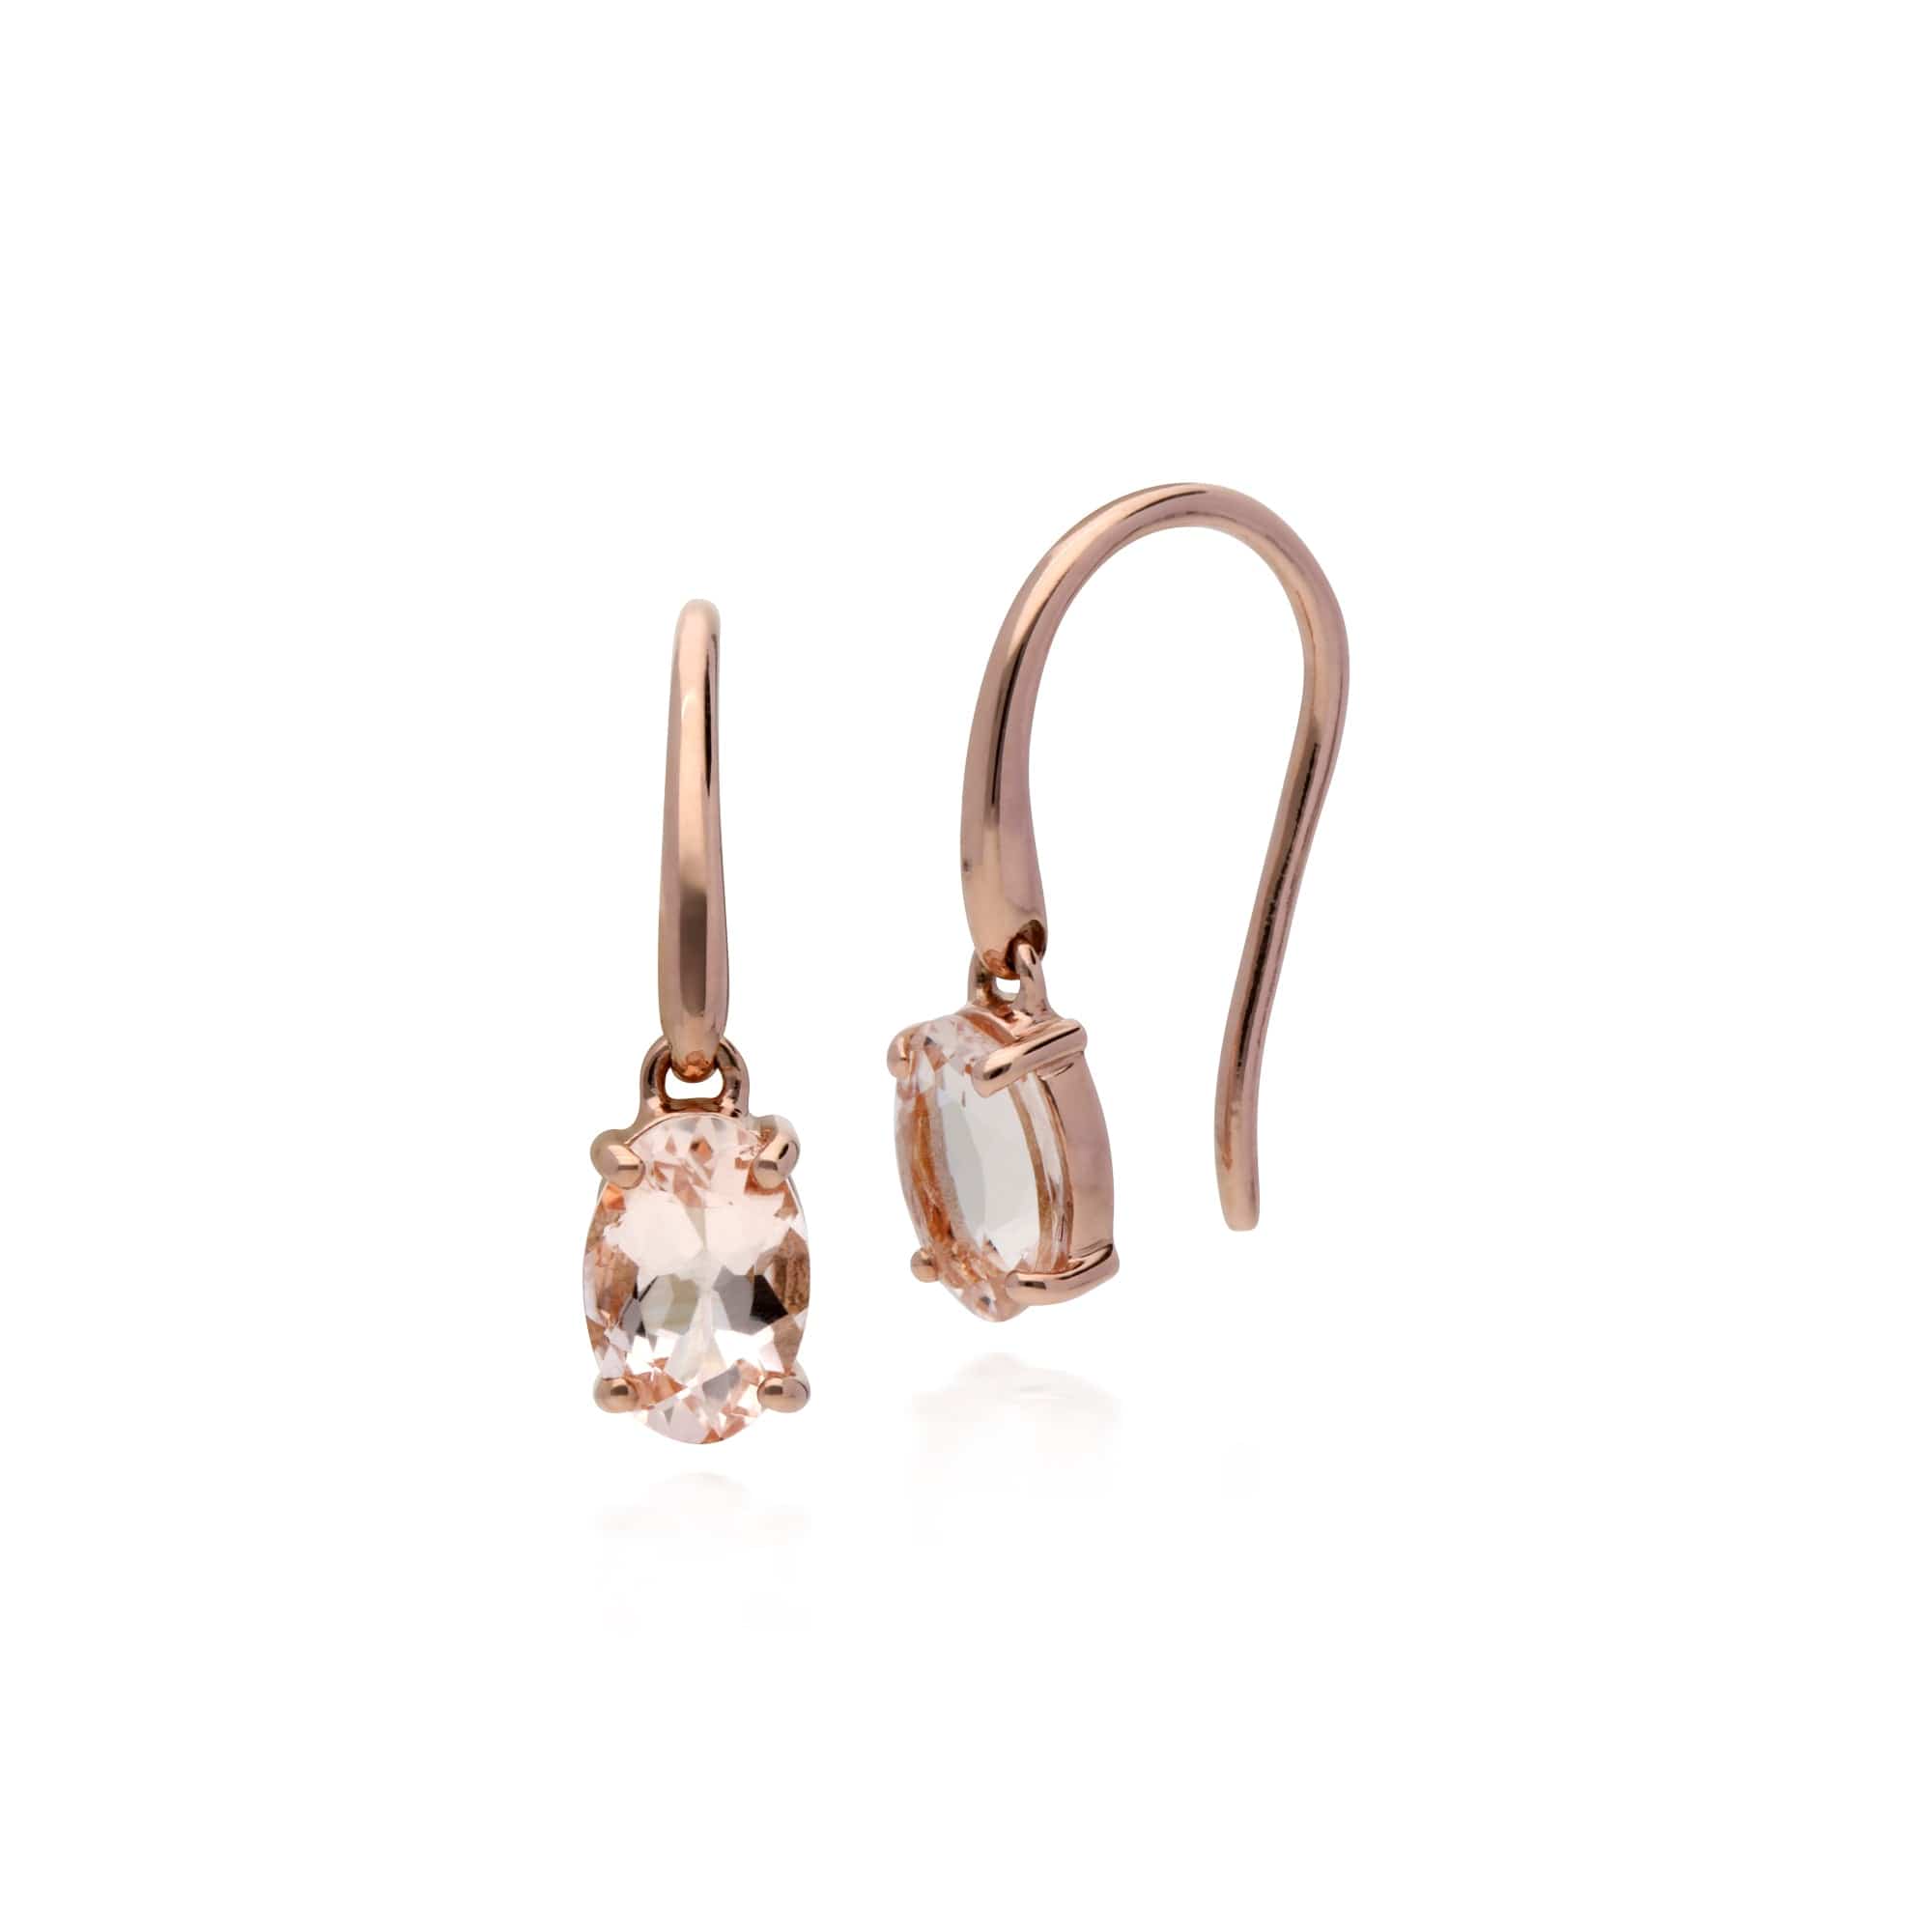 Classic Oval Morganite Drop Fish Hook Earrings in 9ct Rose Gold - Gemondo